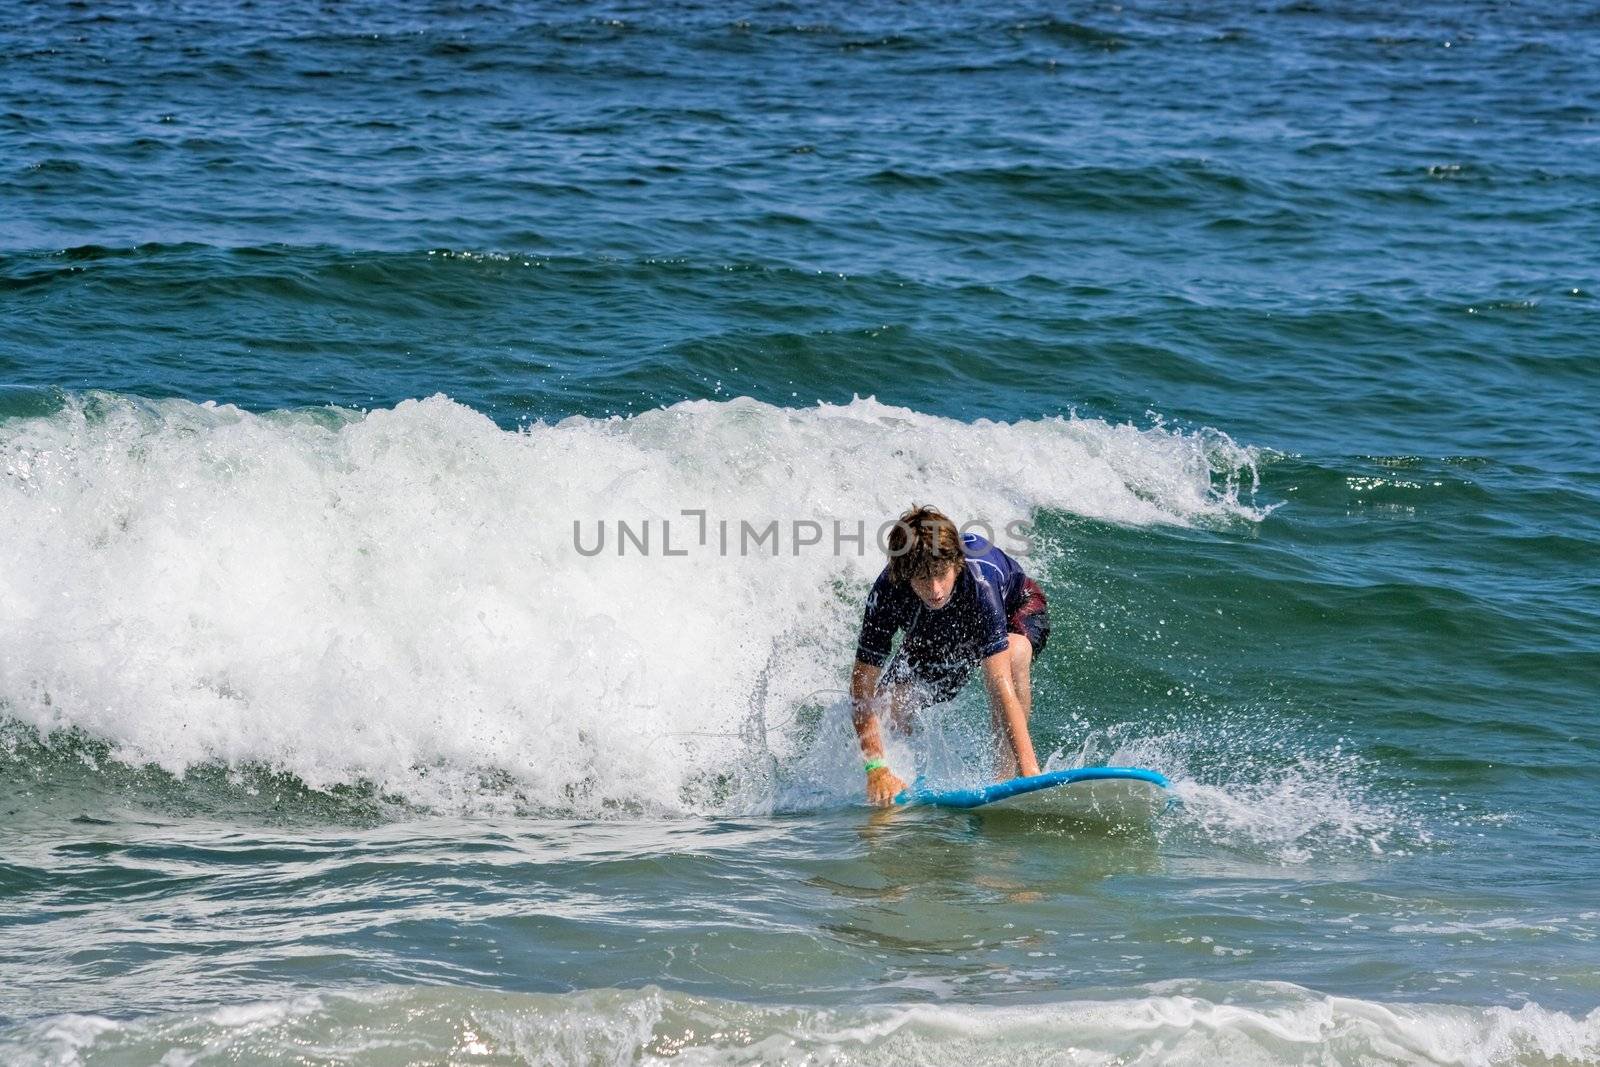 A teenage boy surfing in the ocean